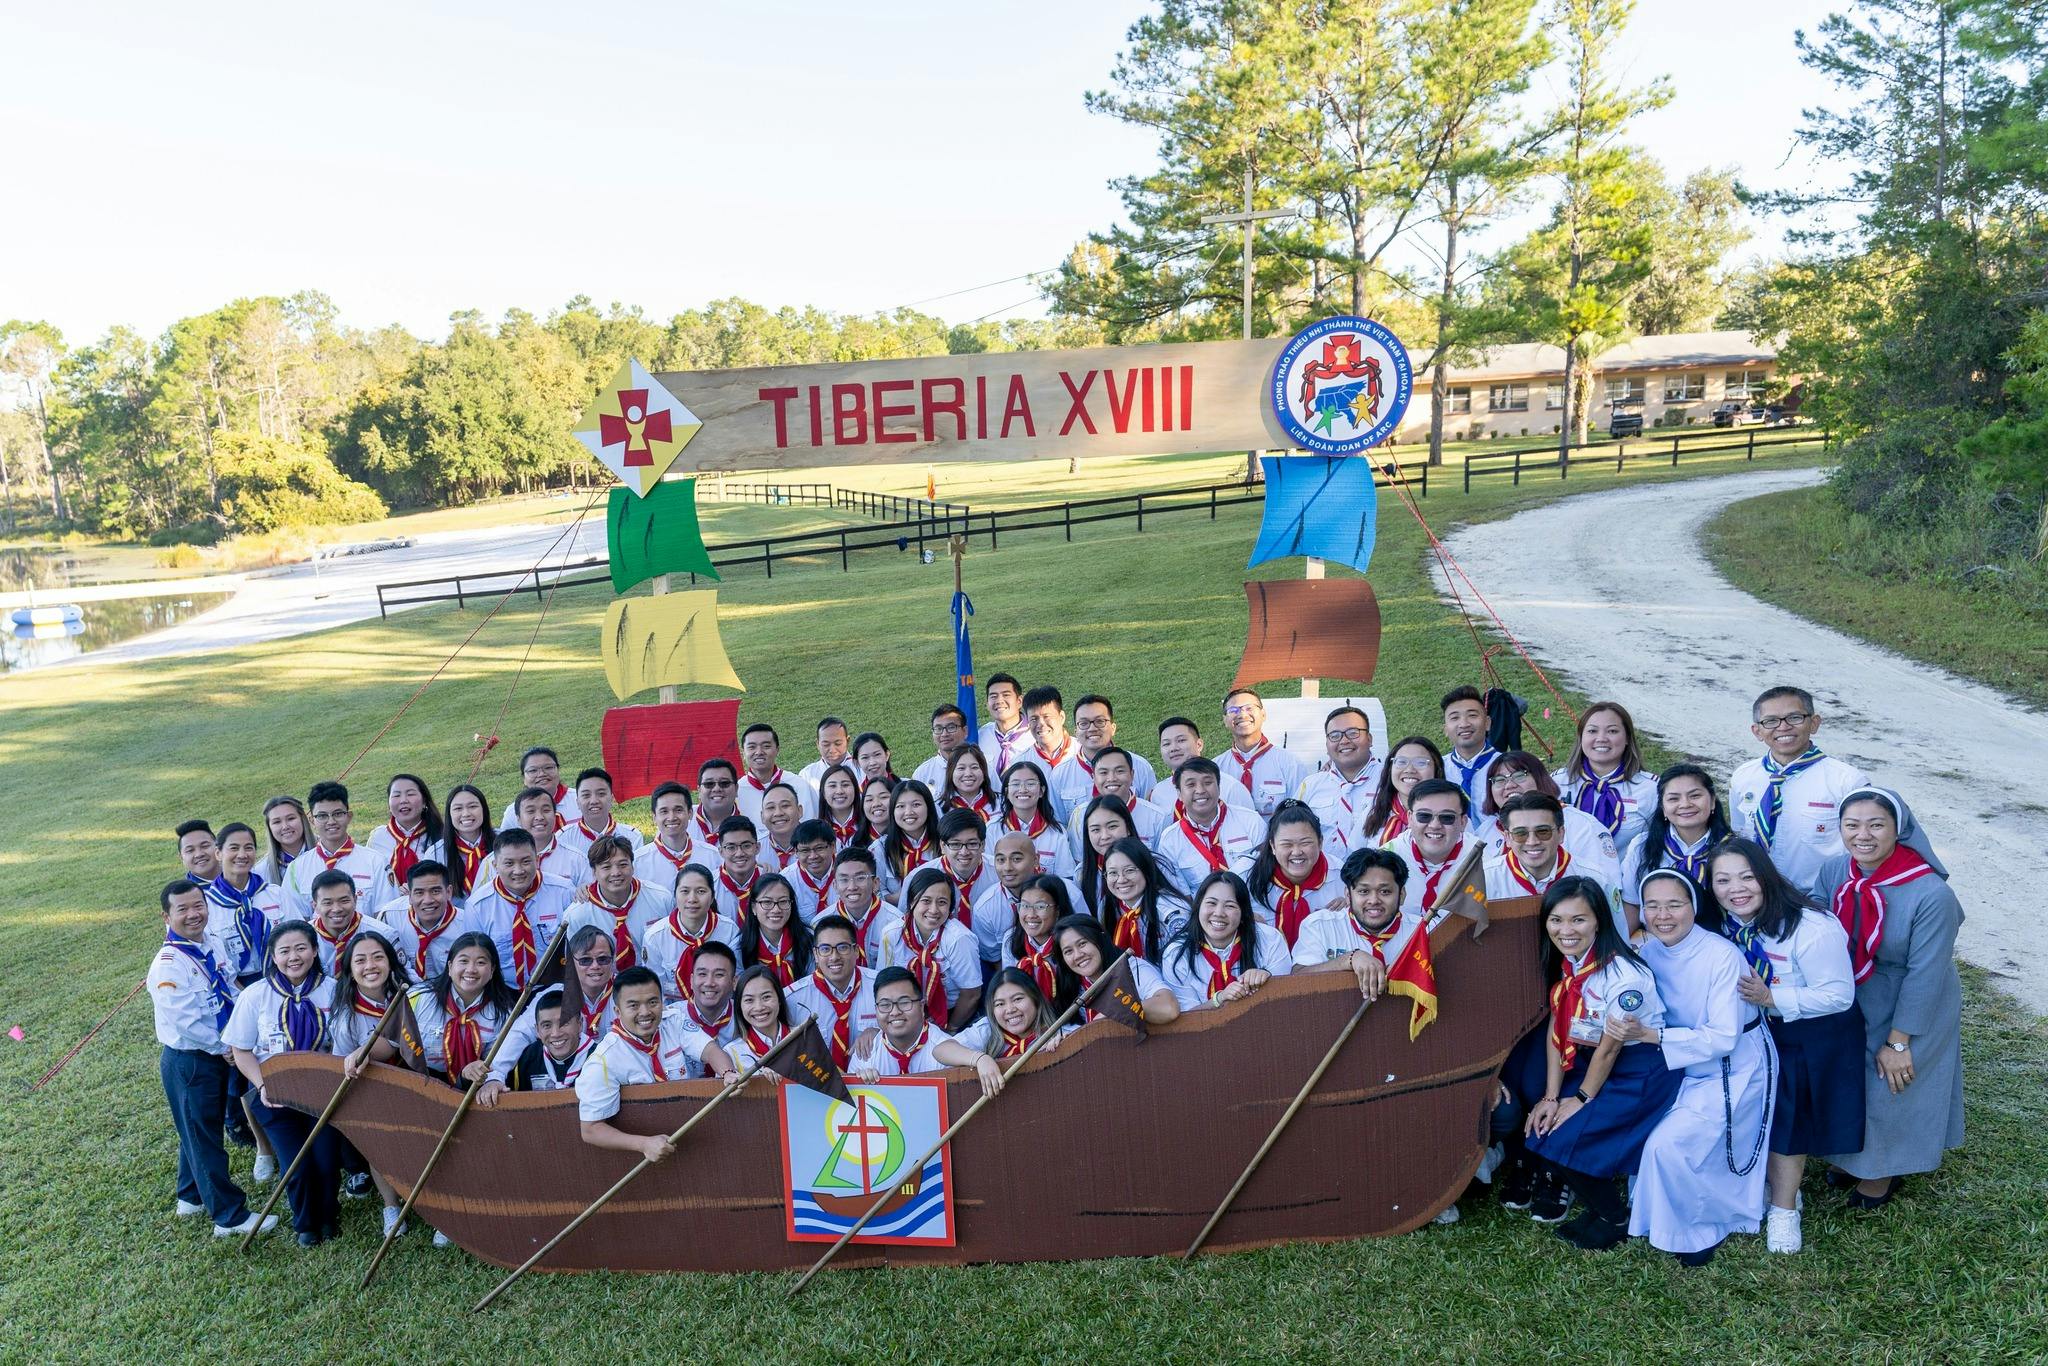 Tiberia XIX - Youth Leader Level III Training Camp